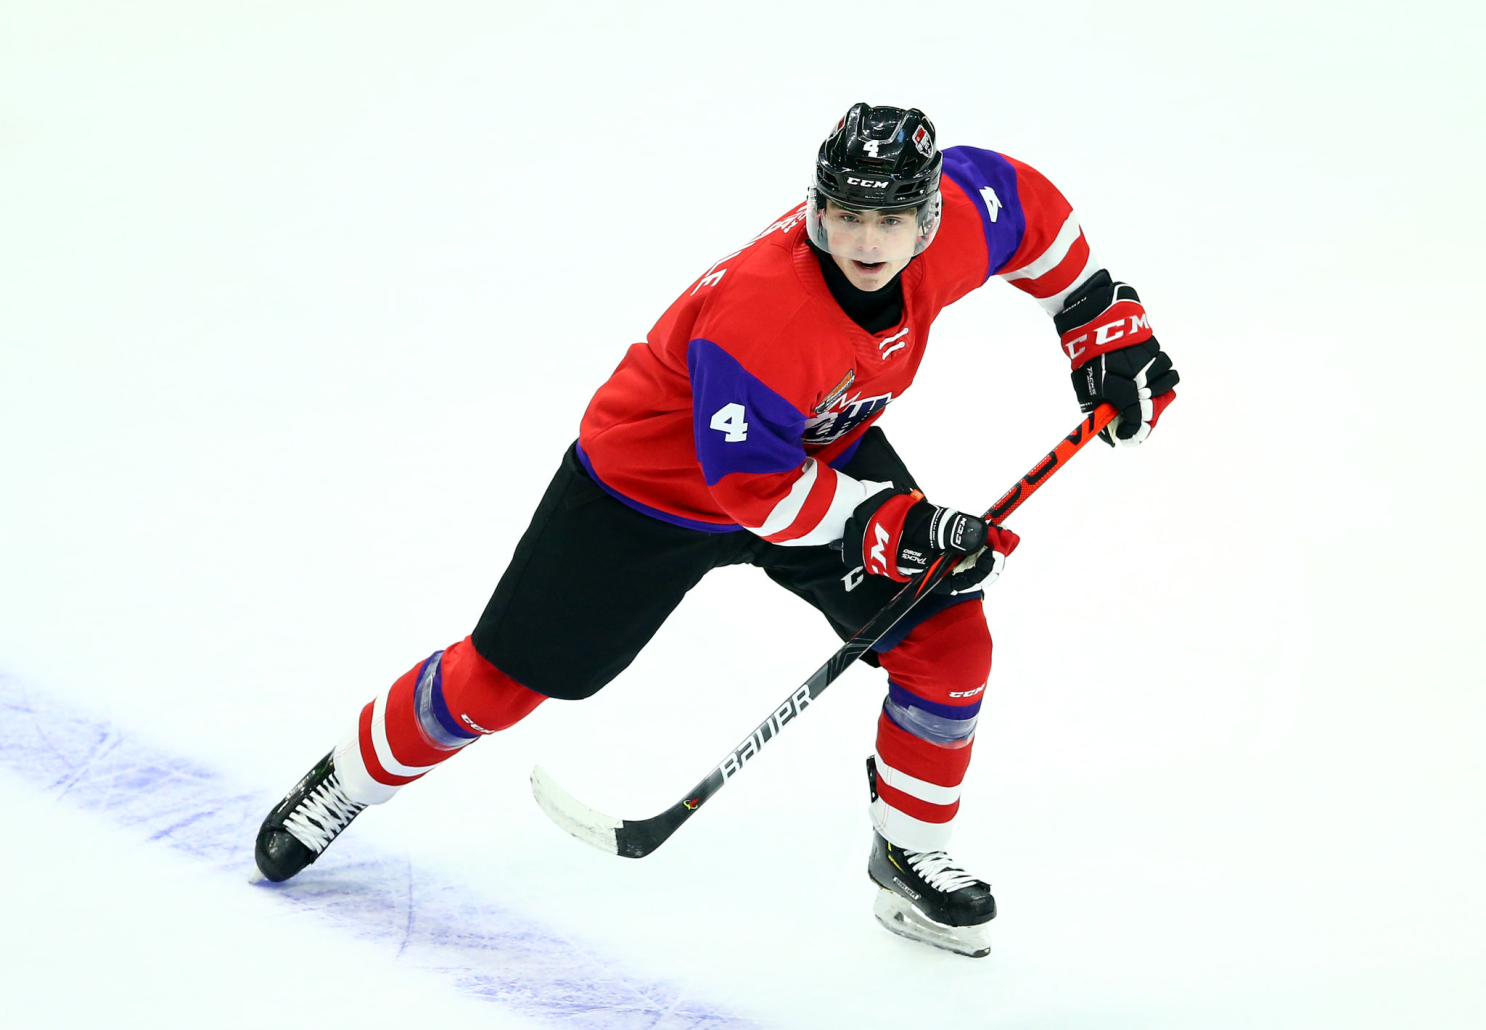 Top draft picks make Erie Otters destination for hockey prospects